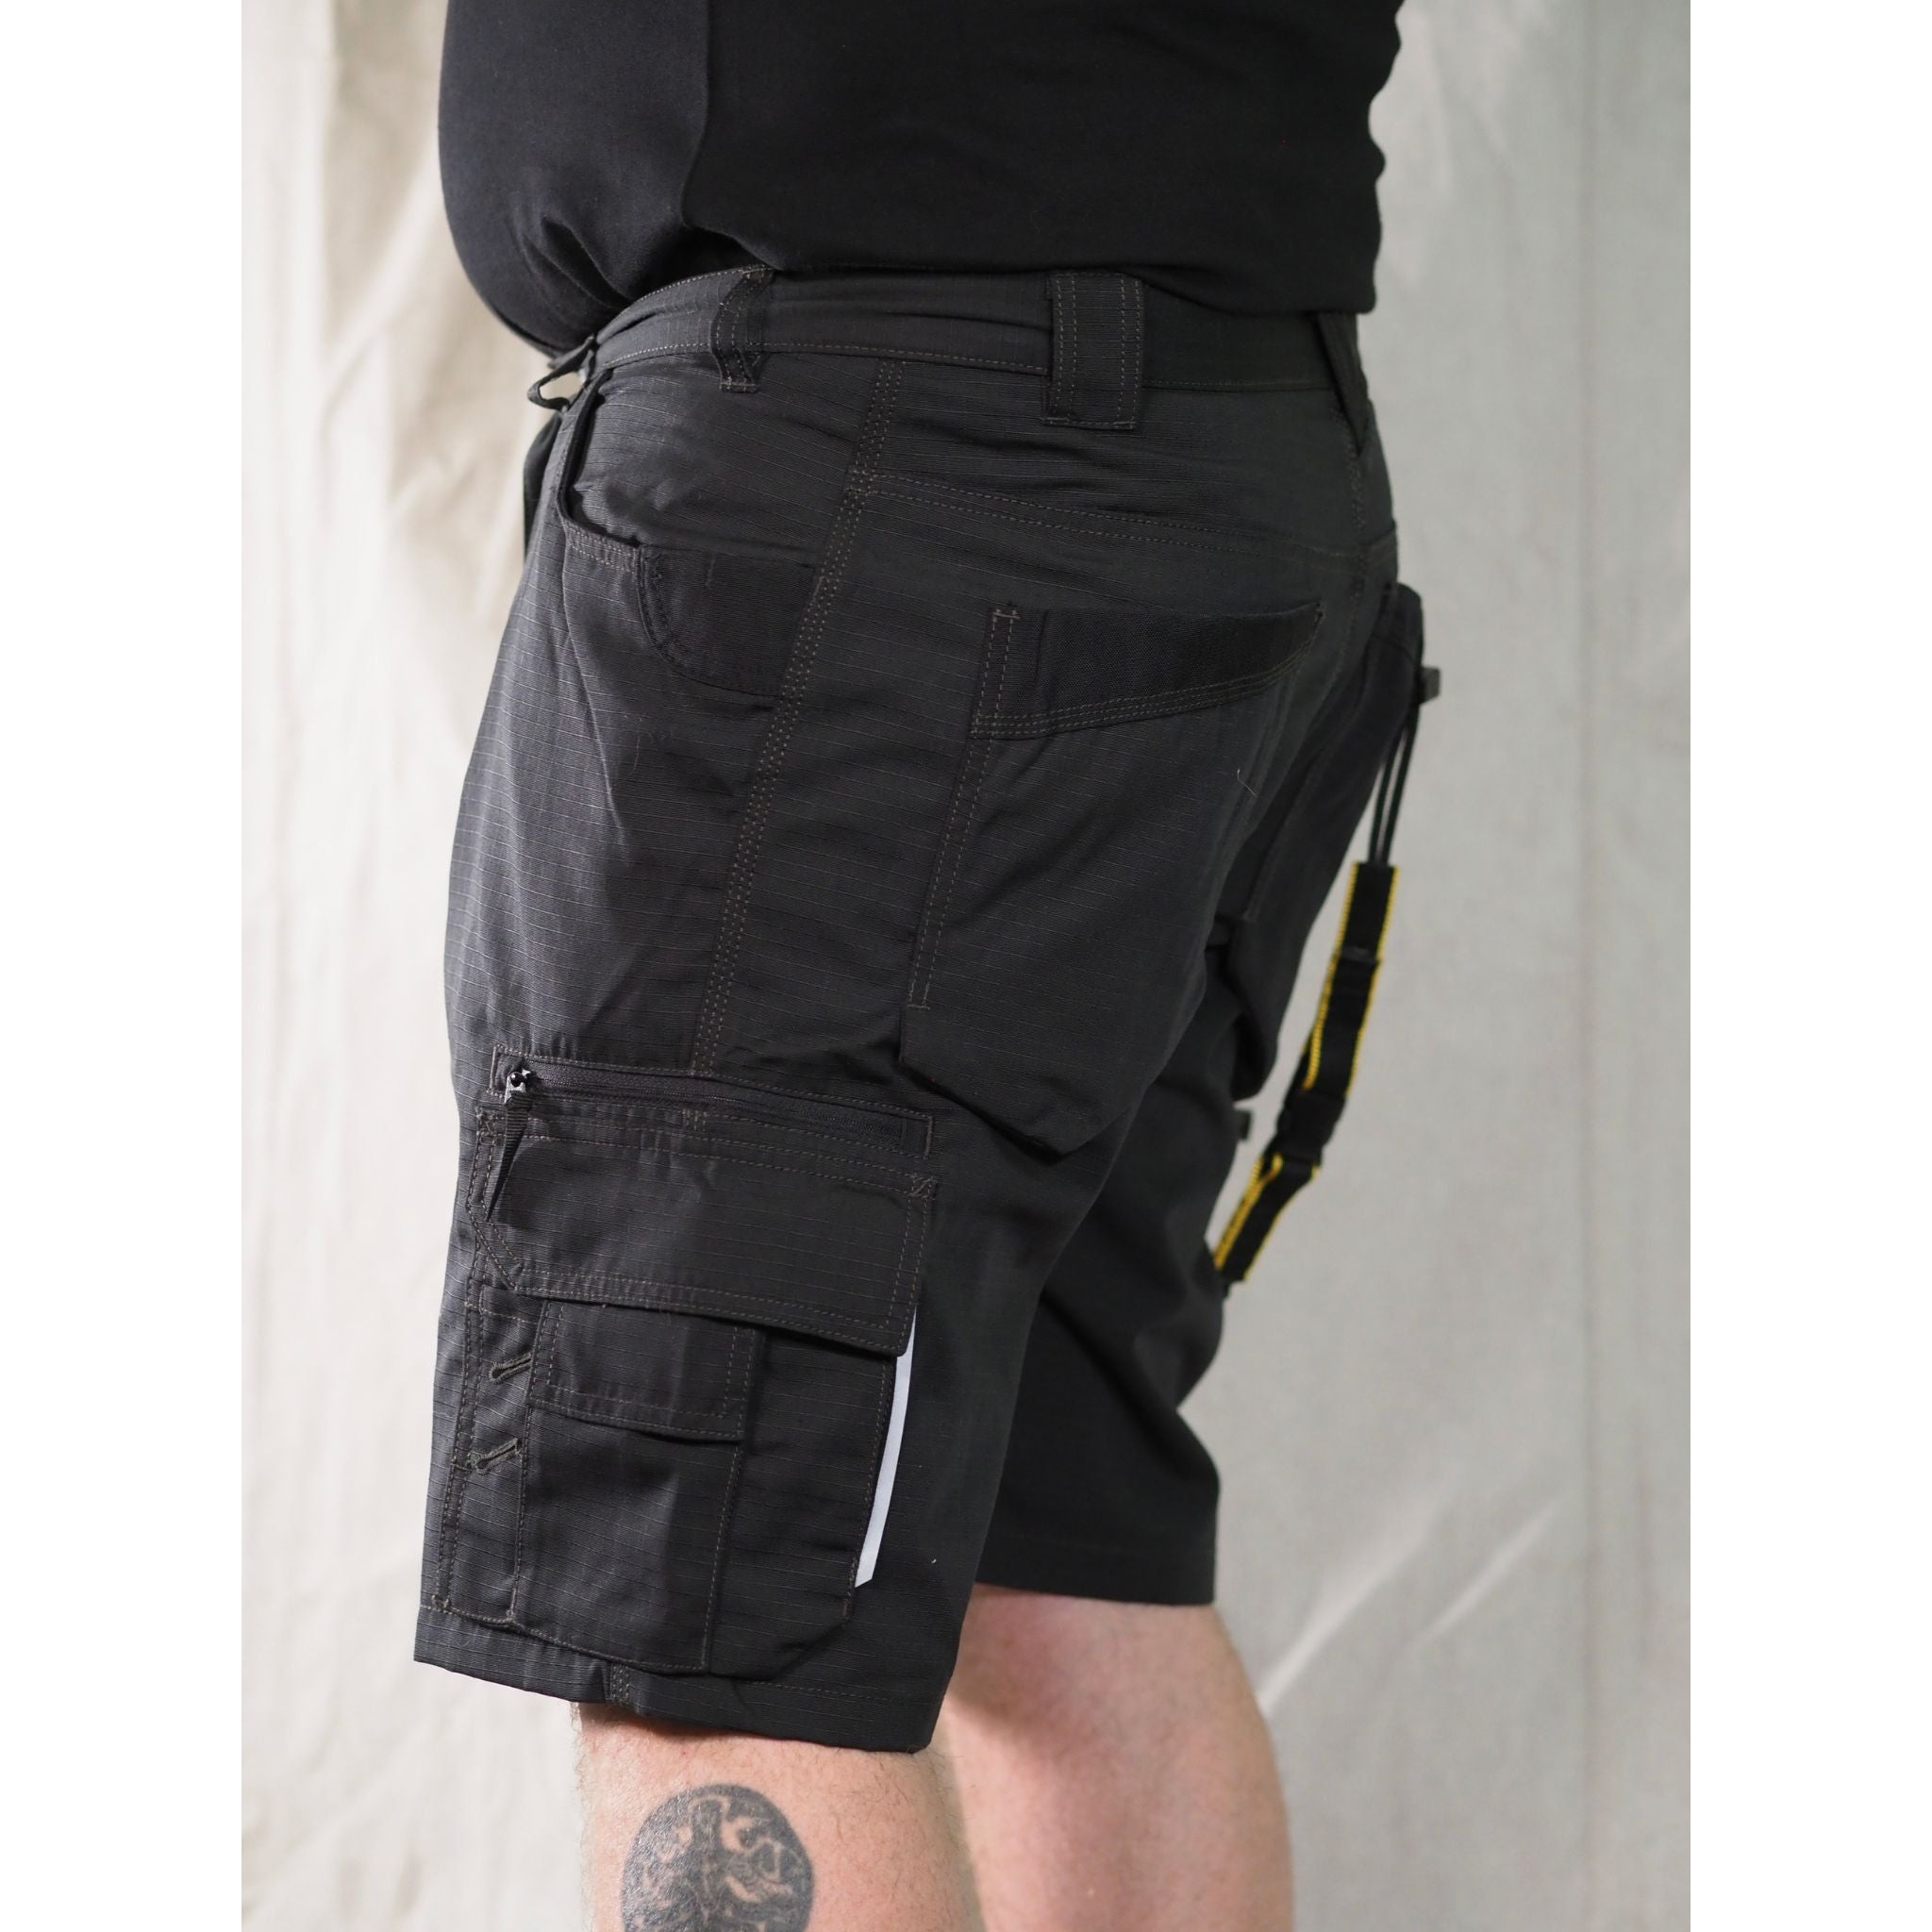 Men's stagehand black shorts with multiple leg pockets